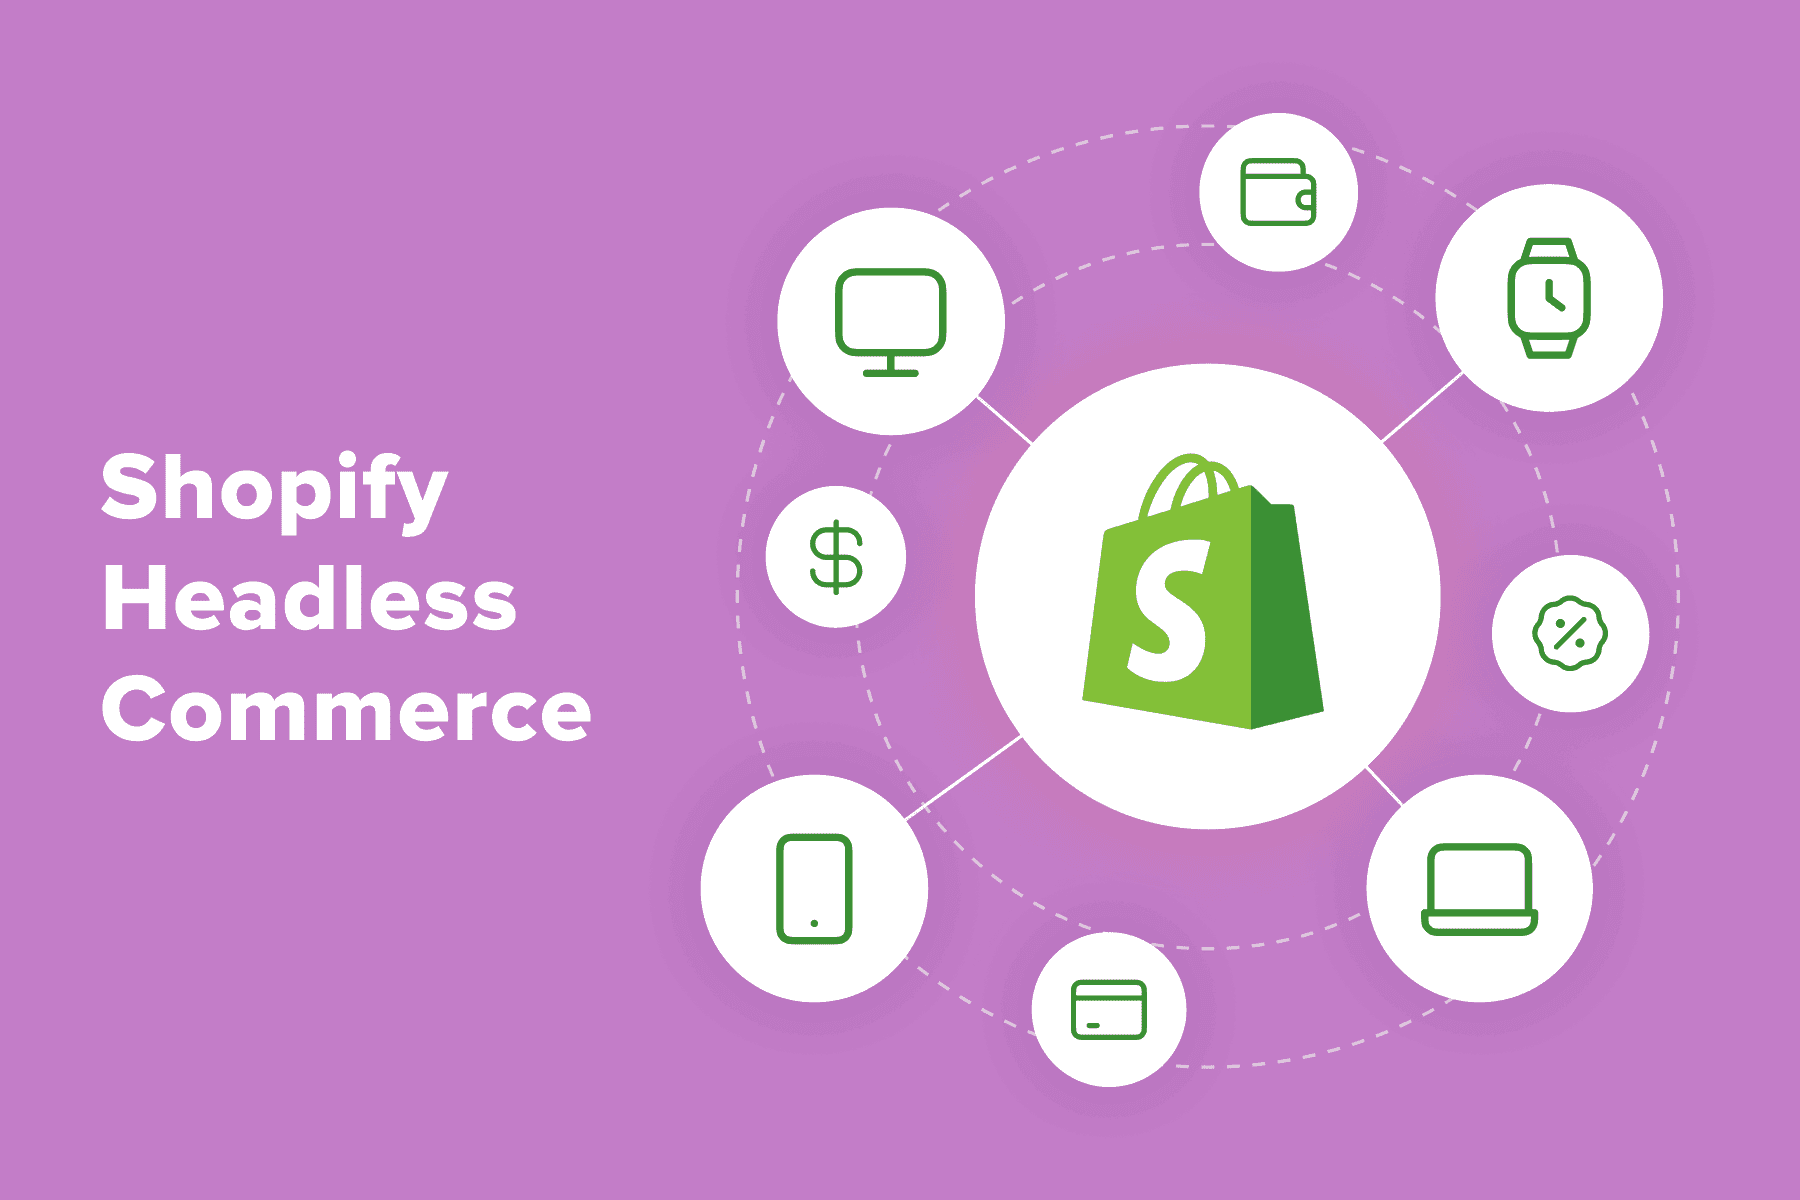 Shopify Headless Commerce